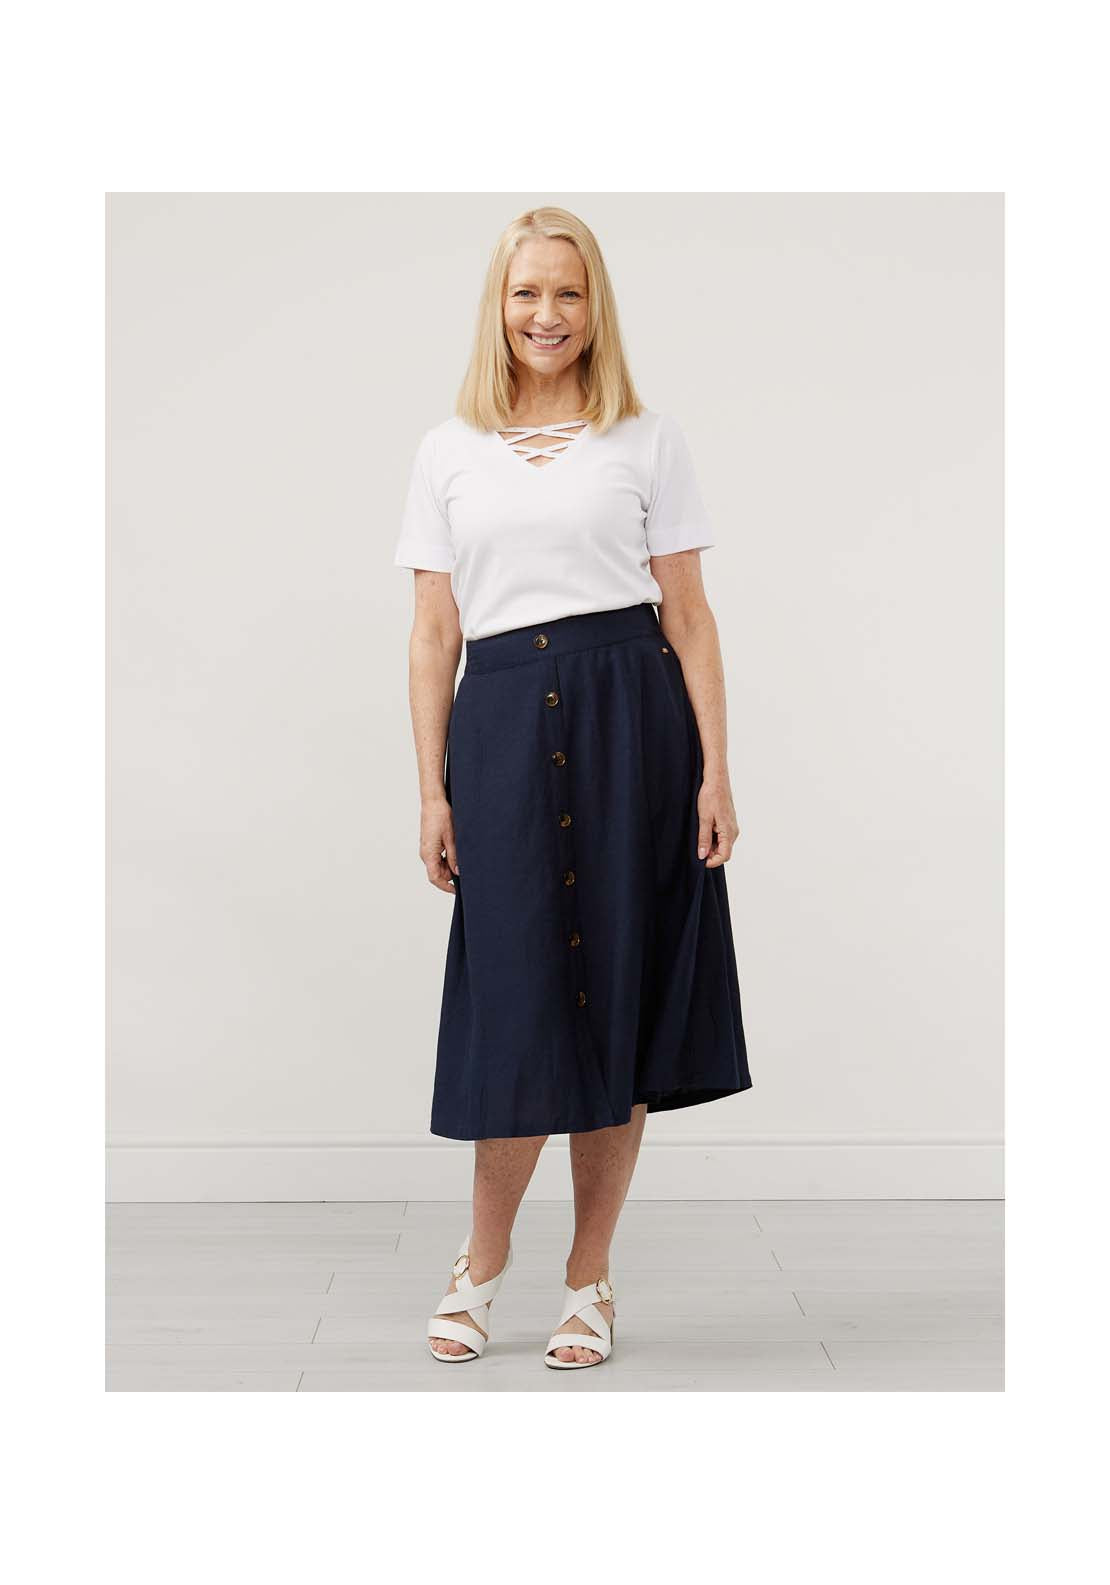 Tigiwear French Navy Linen Skirt 1 Shaws Department Stores